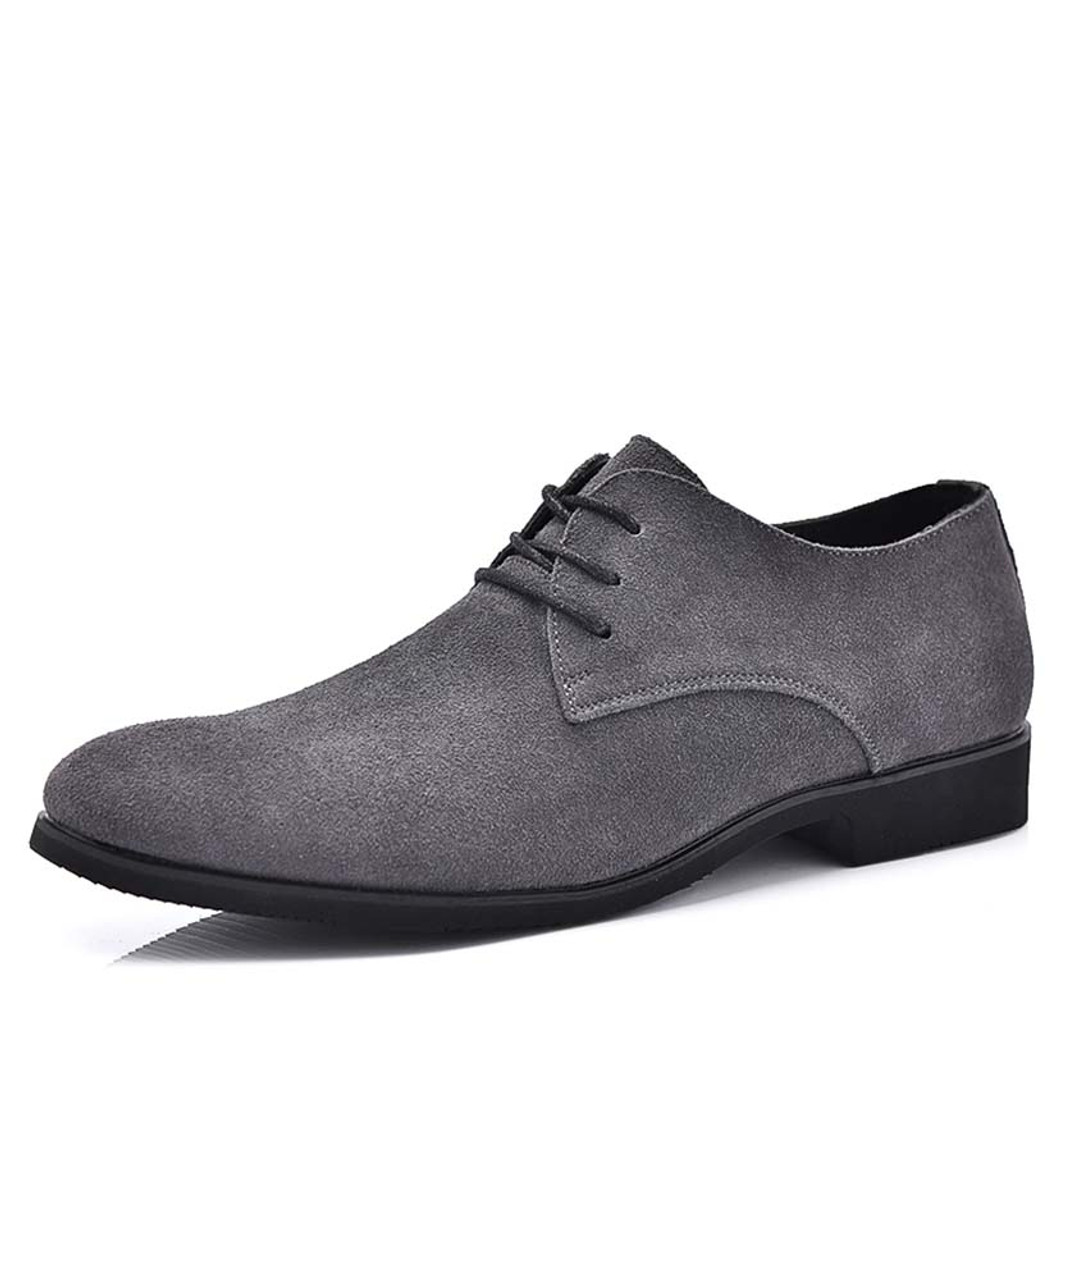 mens grey casual dress shoes